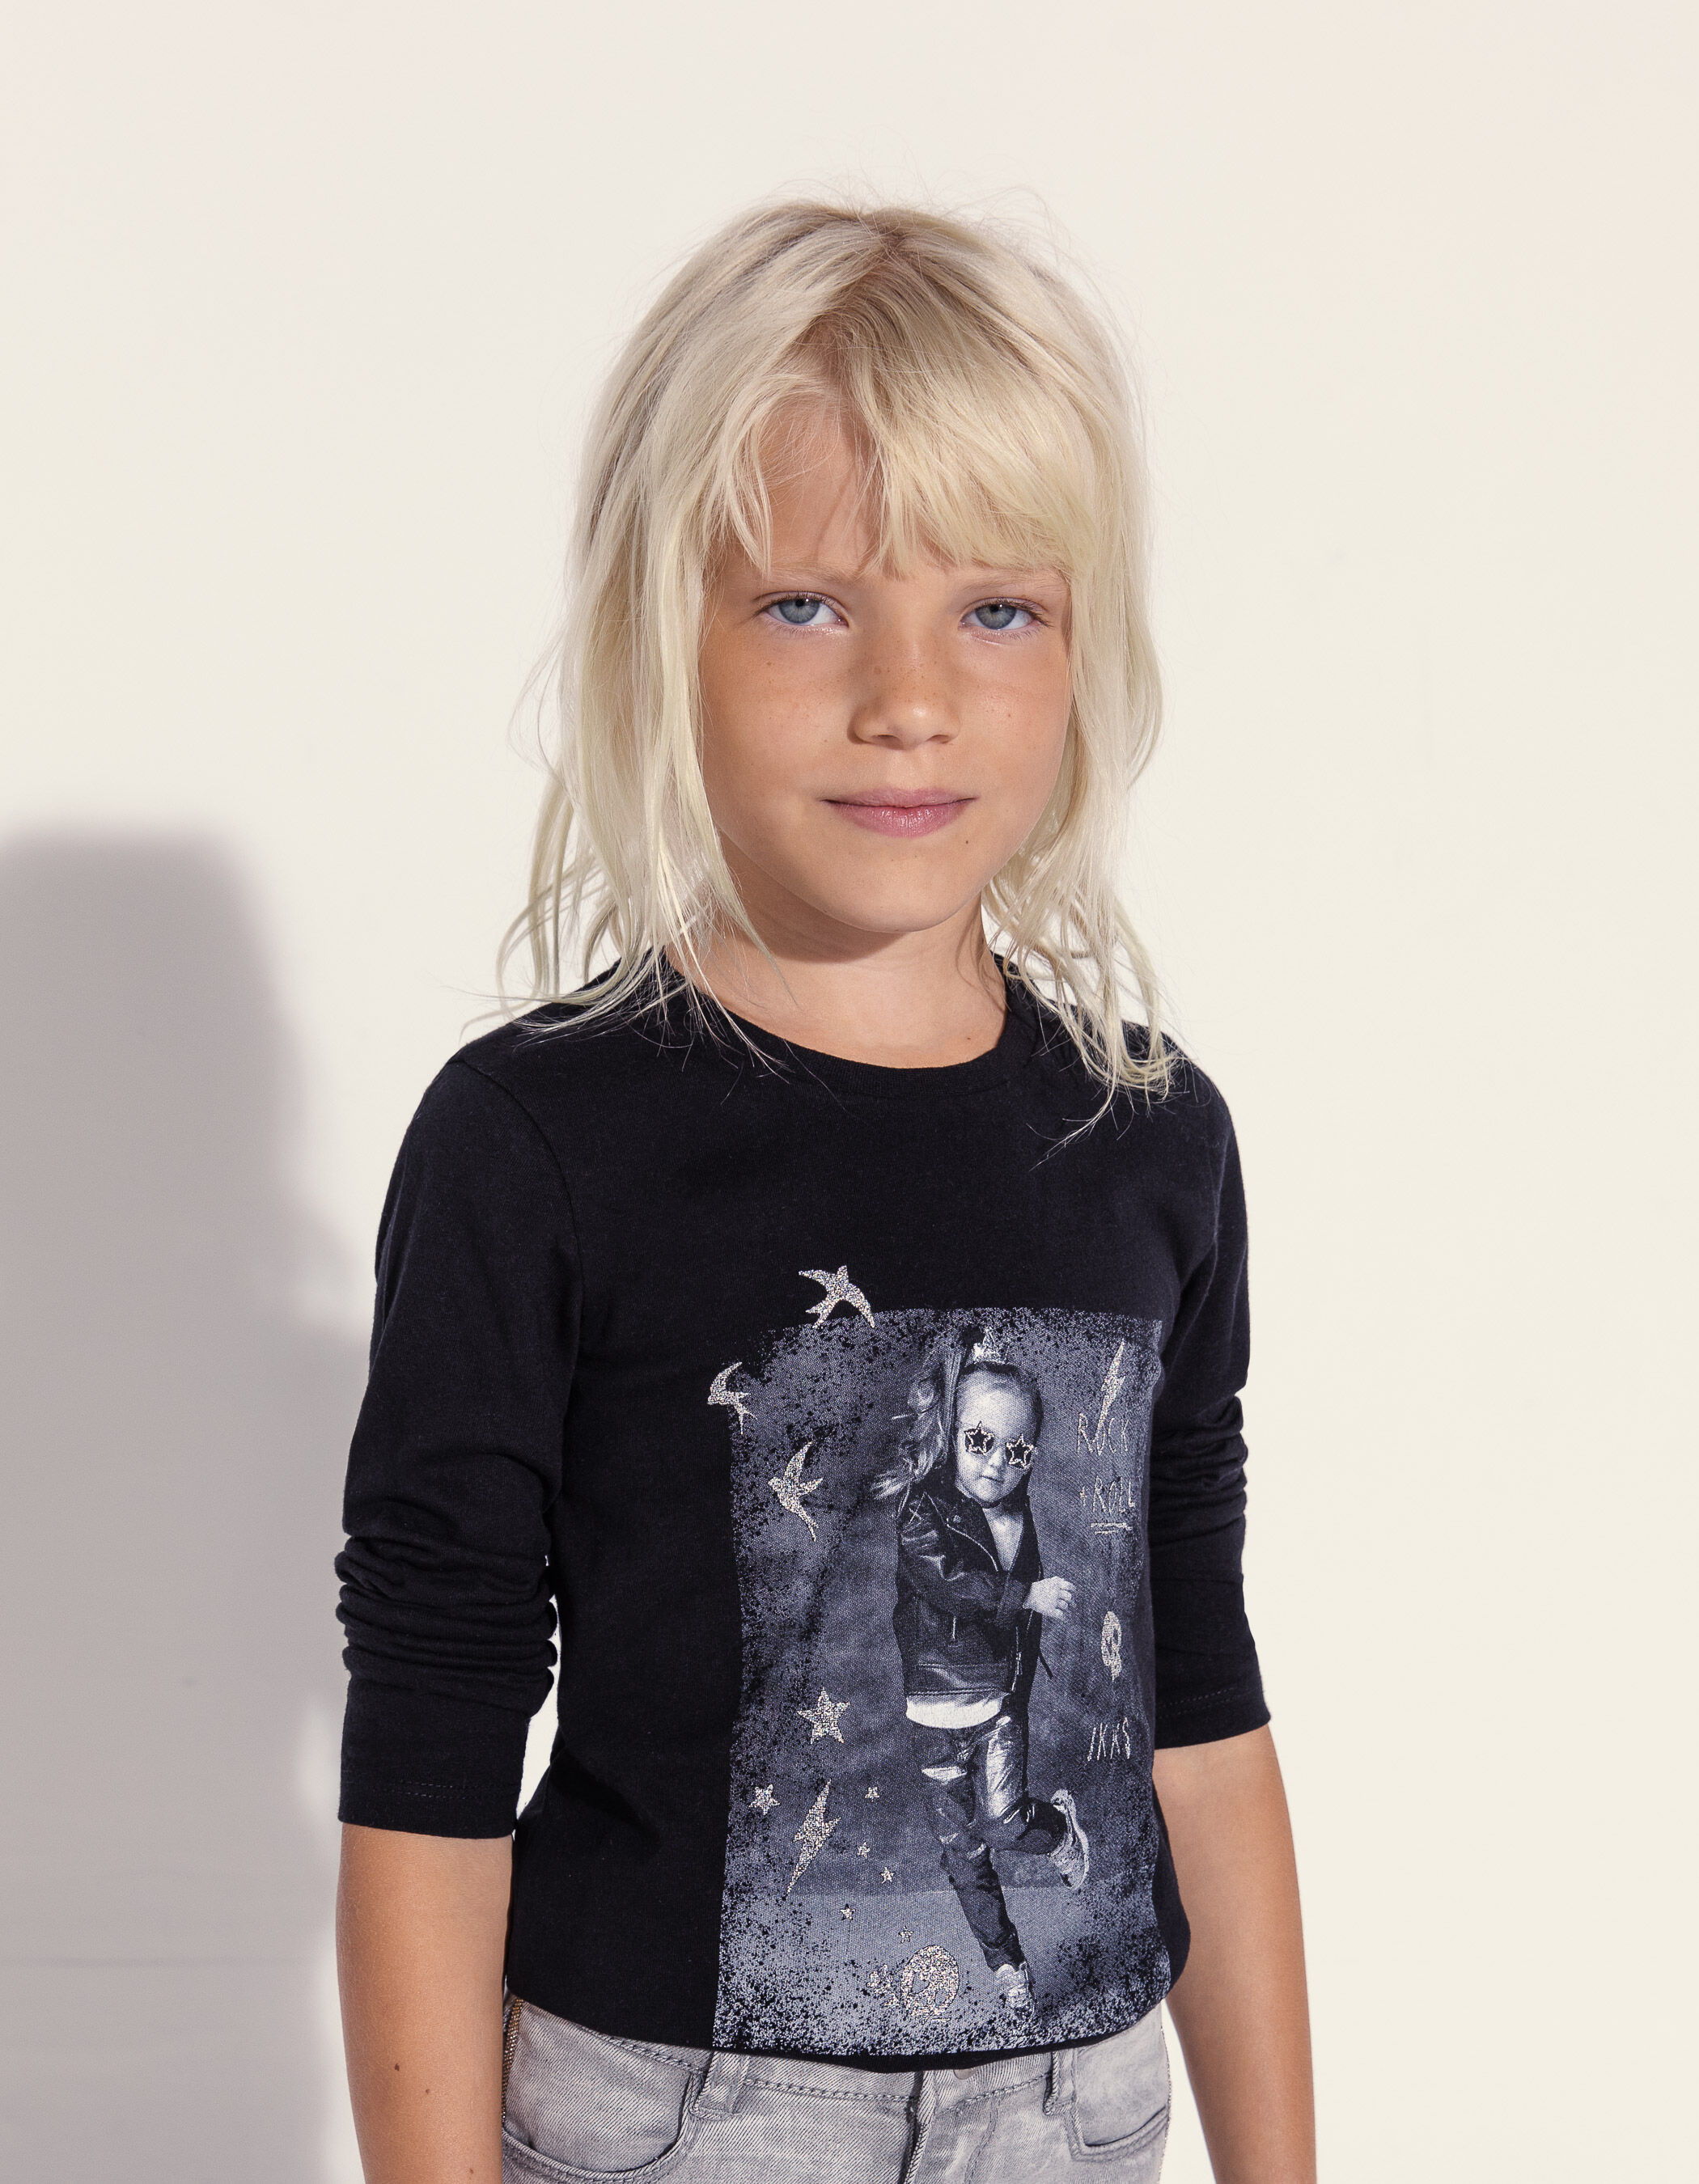 Kleding Unisex kinderkleding Tops & T-shirts T-shirts T-shirts met print Caliber Apparel Voeg toe aan de achterkant van elk shirt 